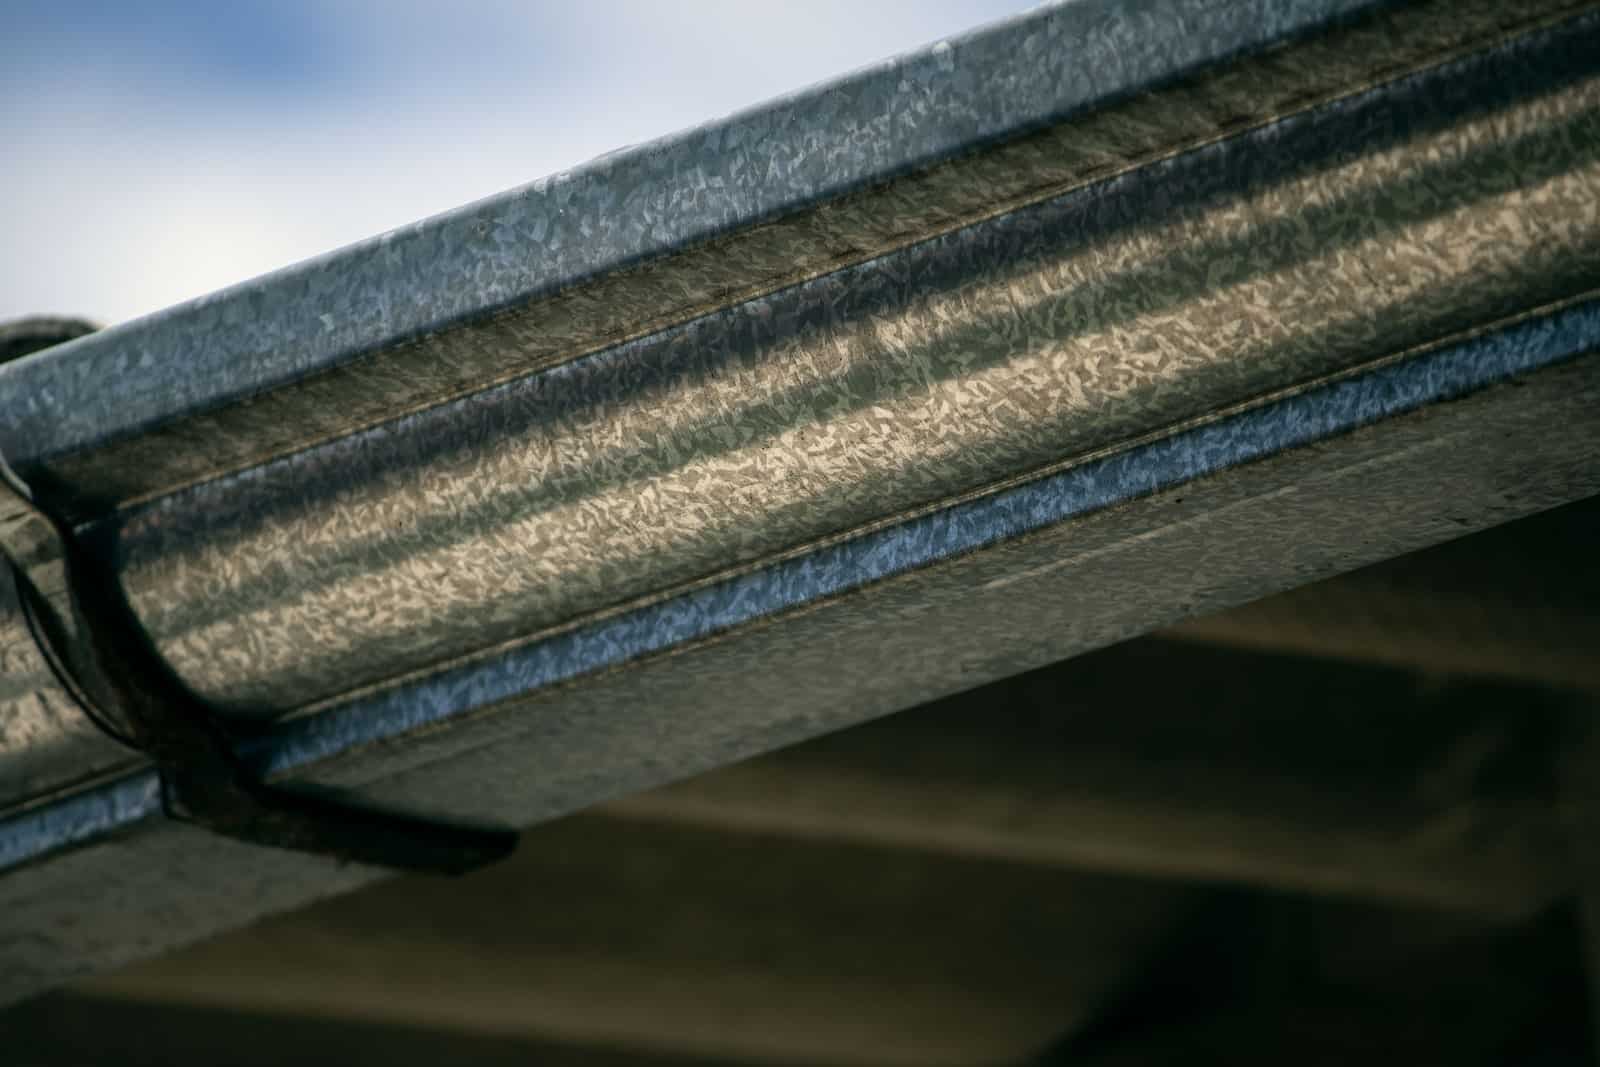 a close up view of a metal gutter